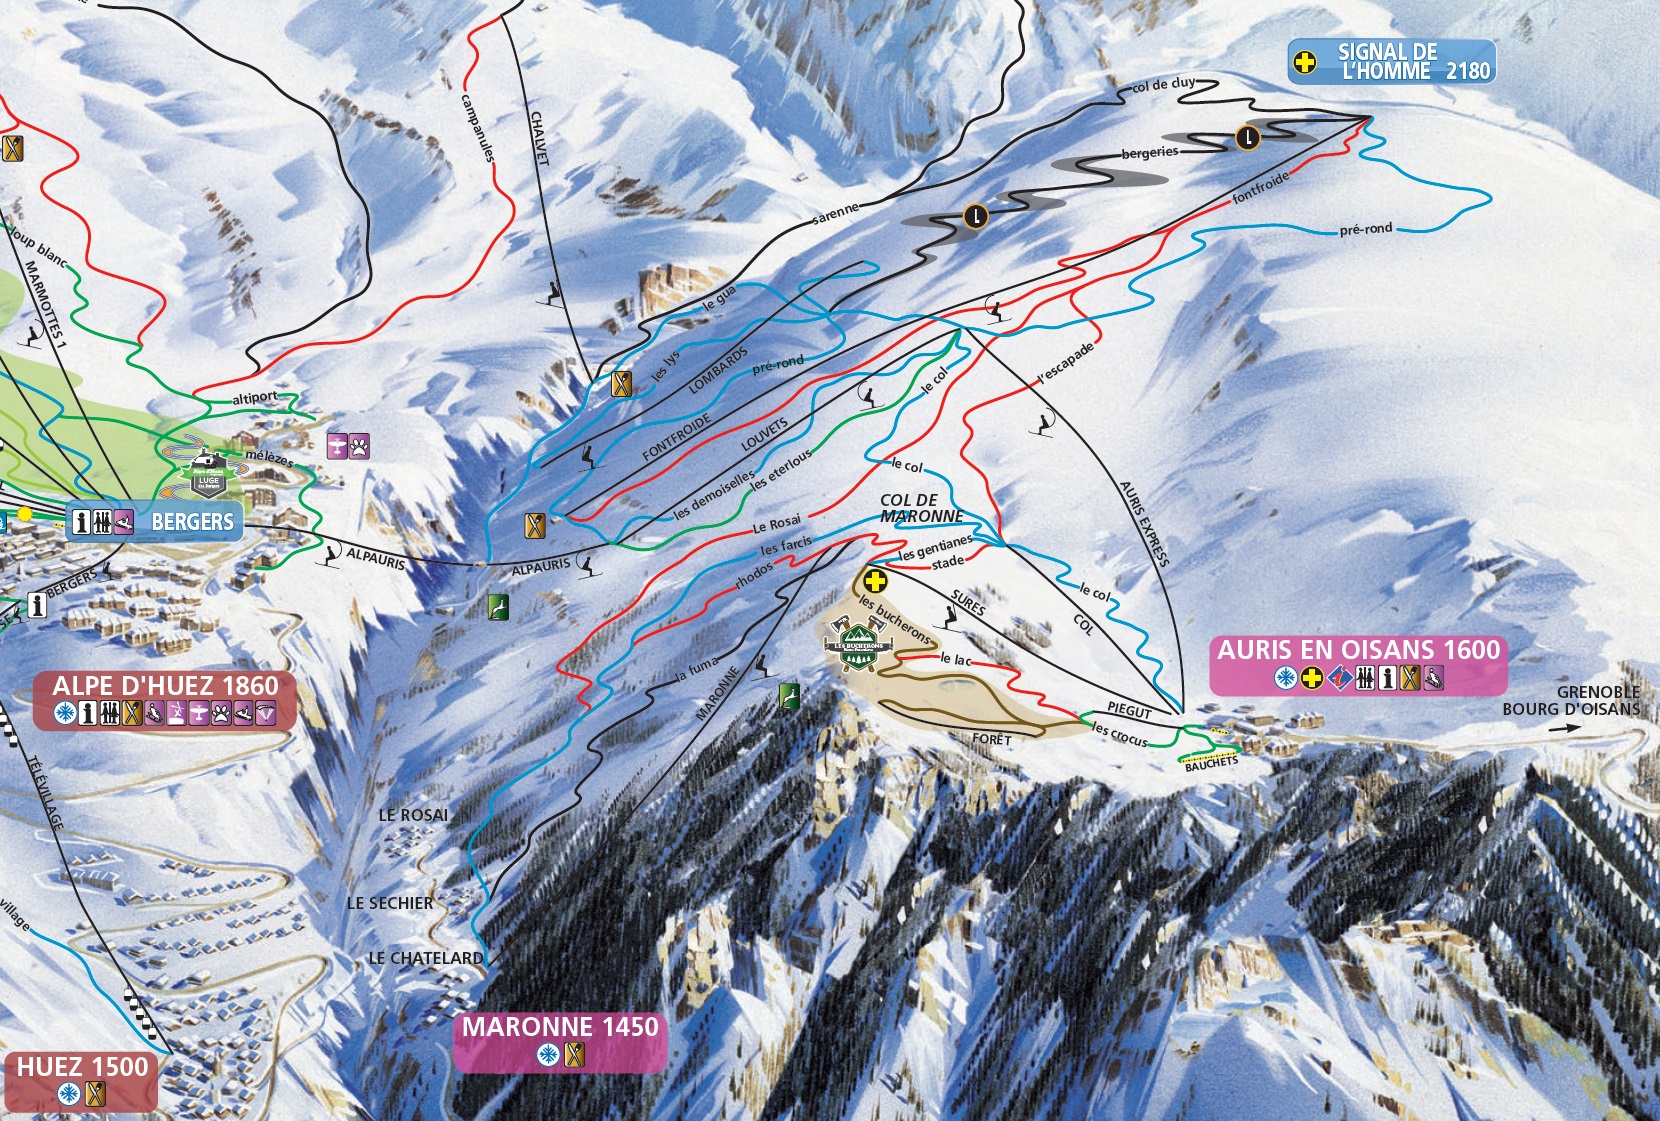 Alpe d'Huez Ski Resort Info Guide